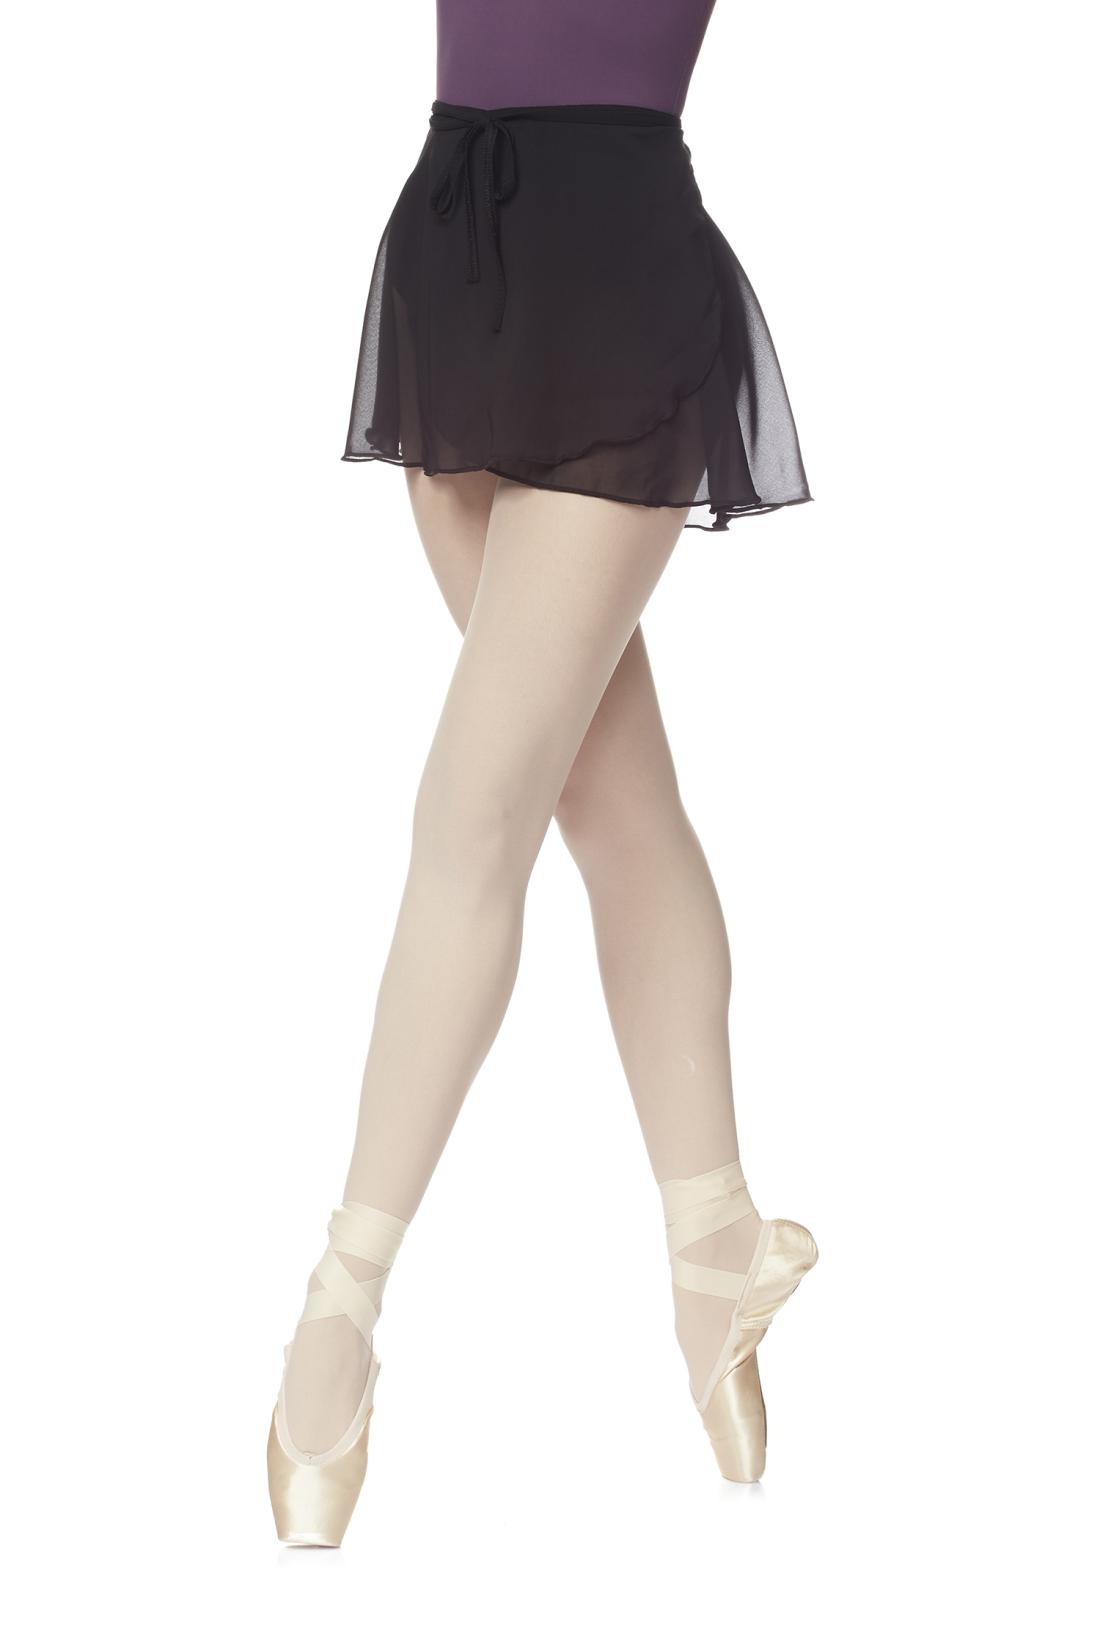 Intermezzo Wrap Ballet skirt with long elastic ties dancewear